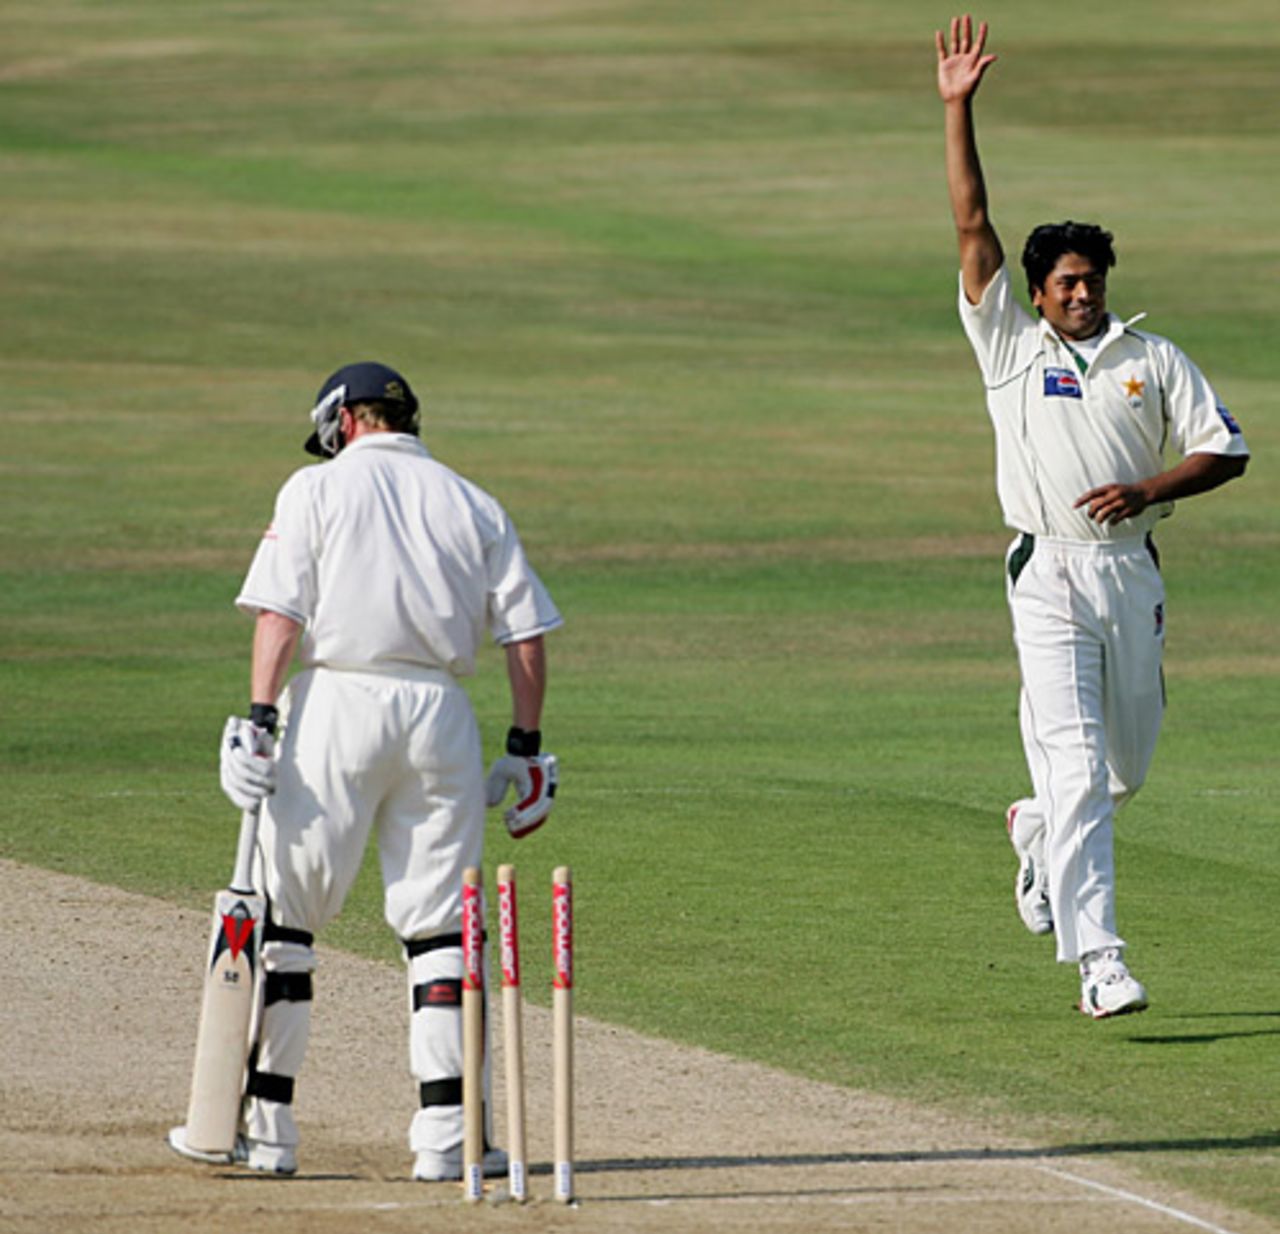 Shahid Nazir celebrates bowling Paul Collingwood, England v Pakistan, 3rd Test, Headingley, August 7, 2006 
